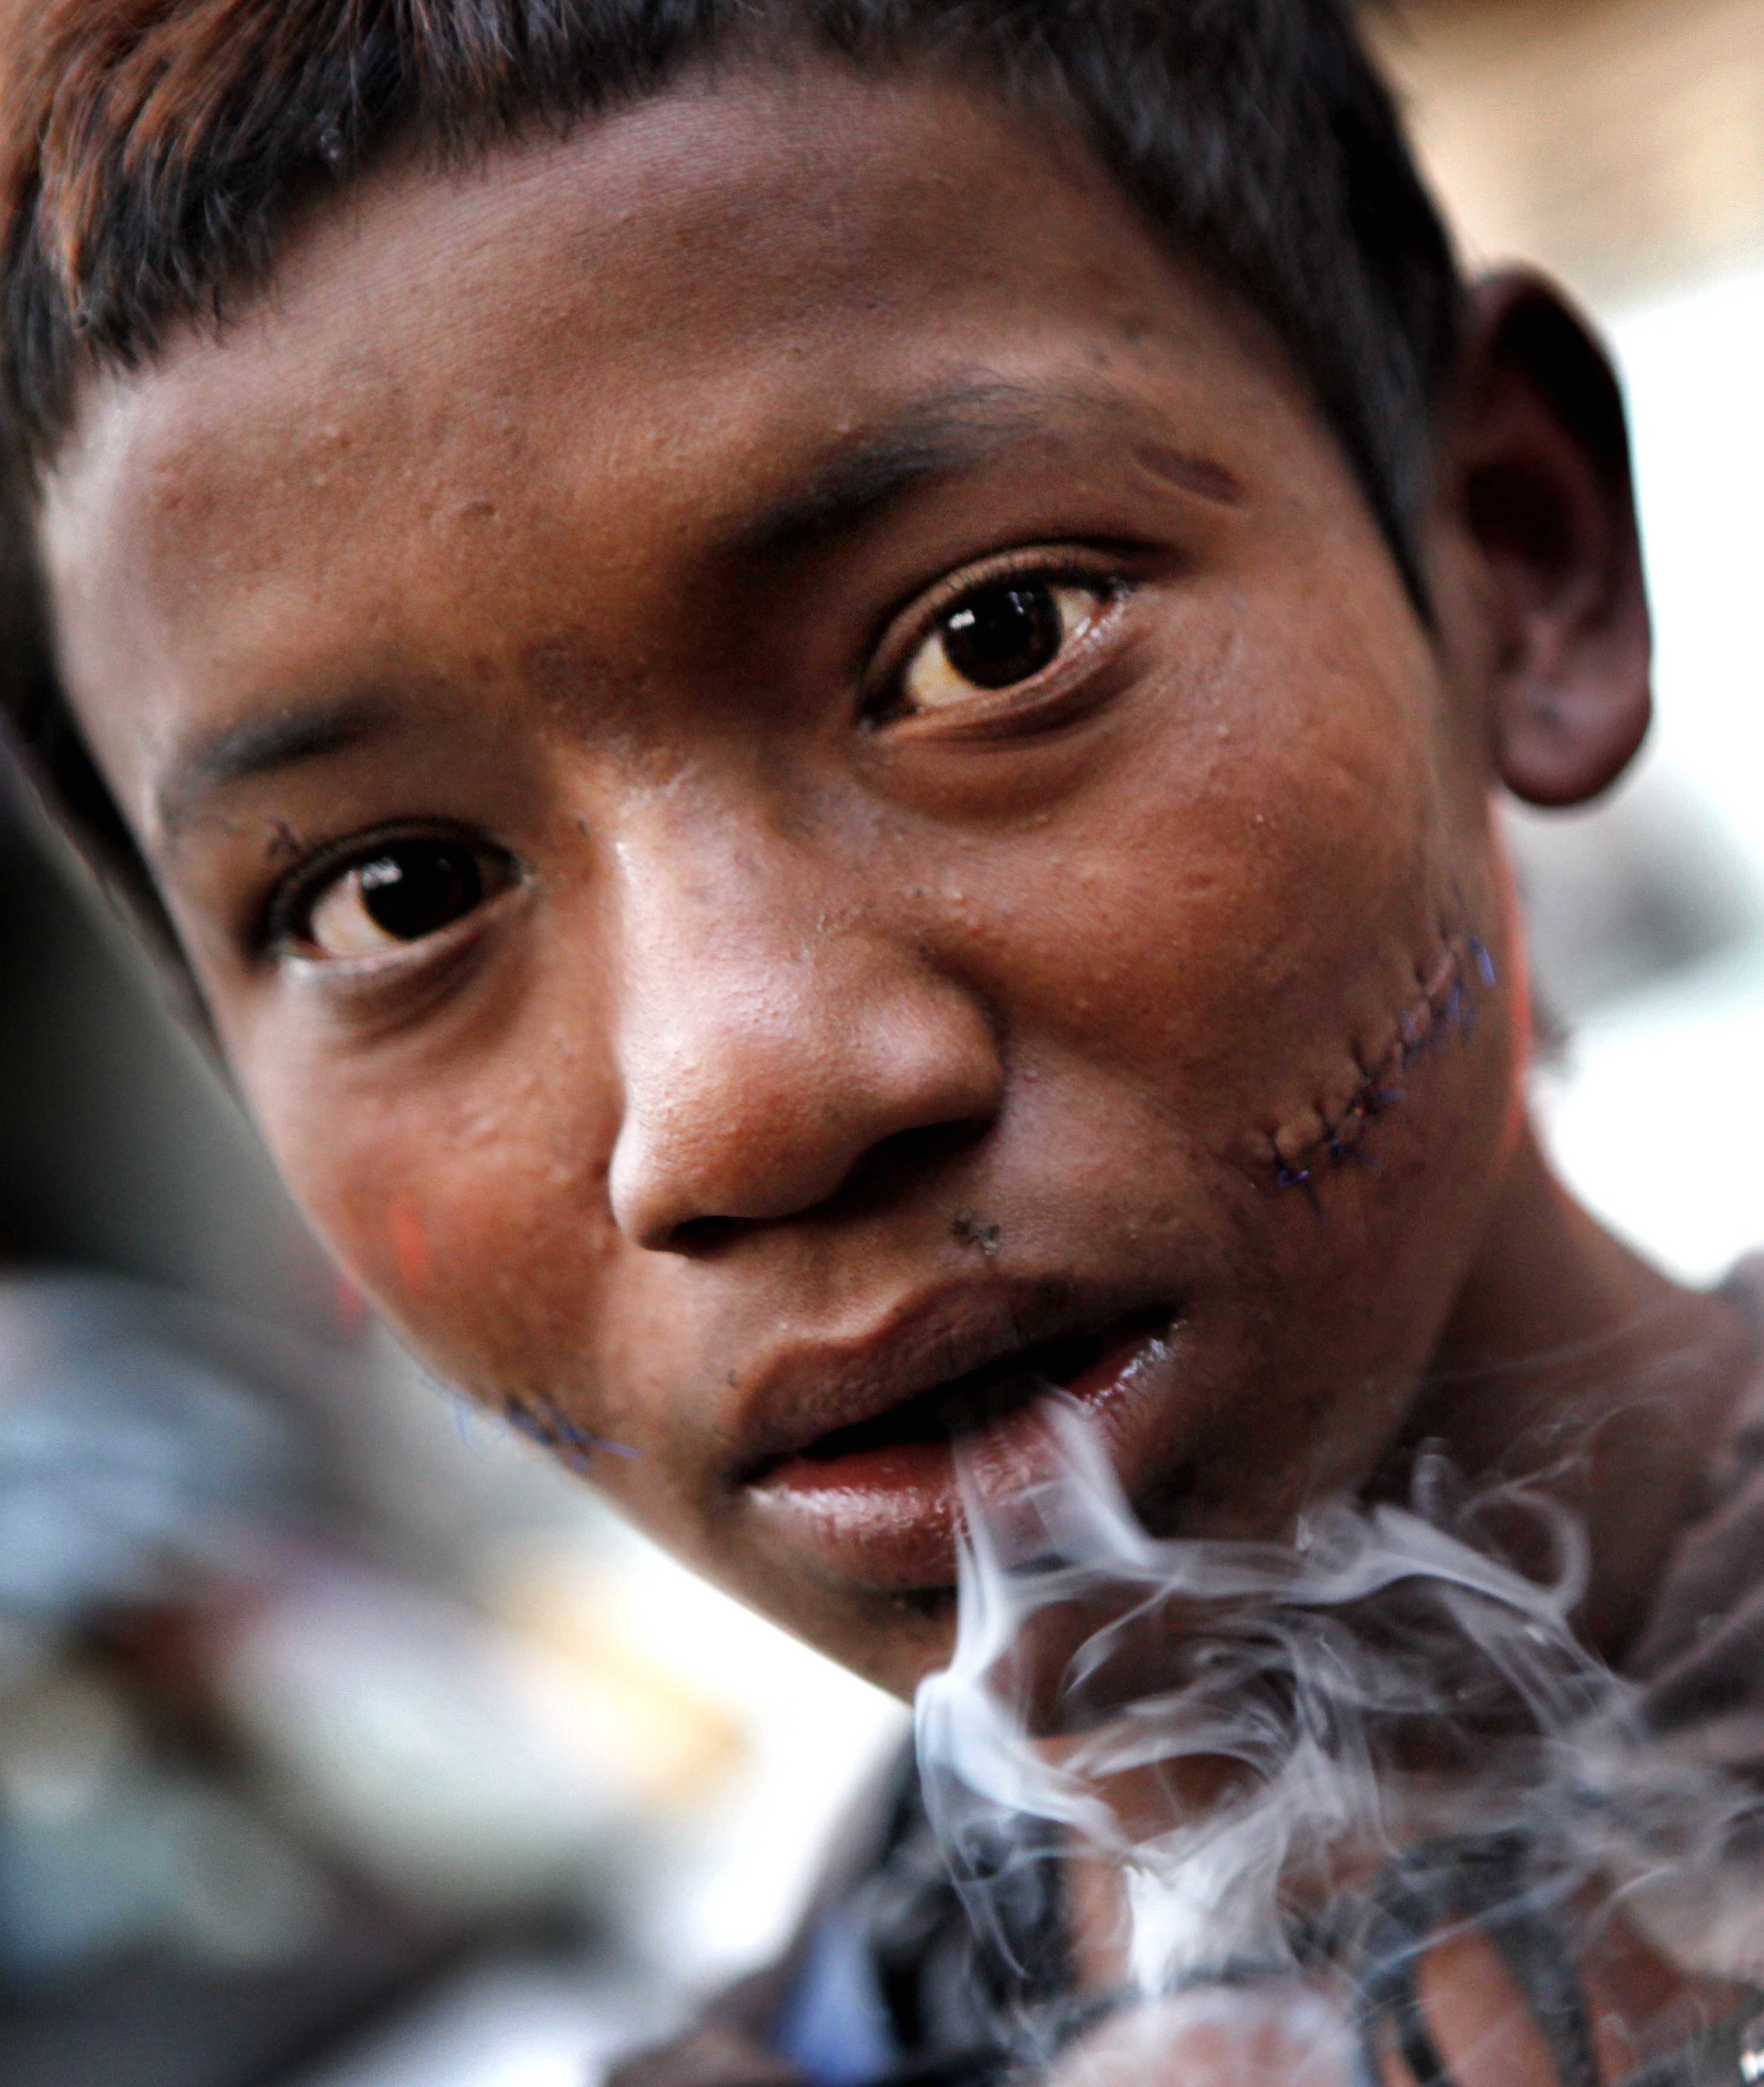  Heroine addict in Nepal 